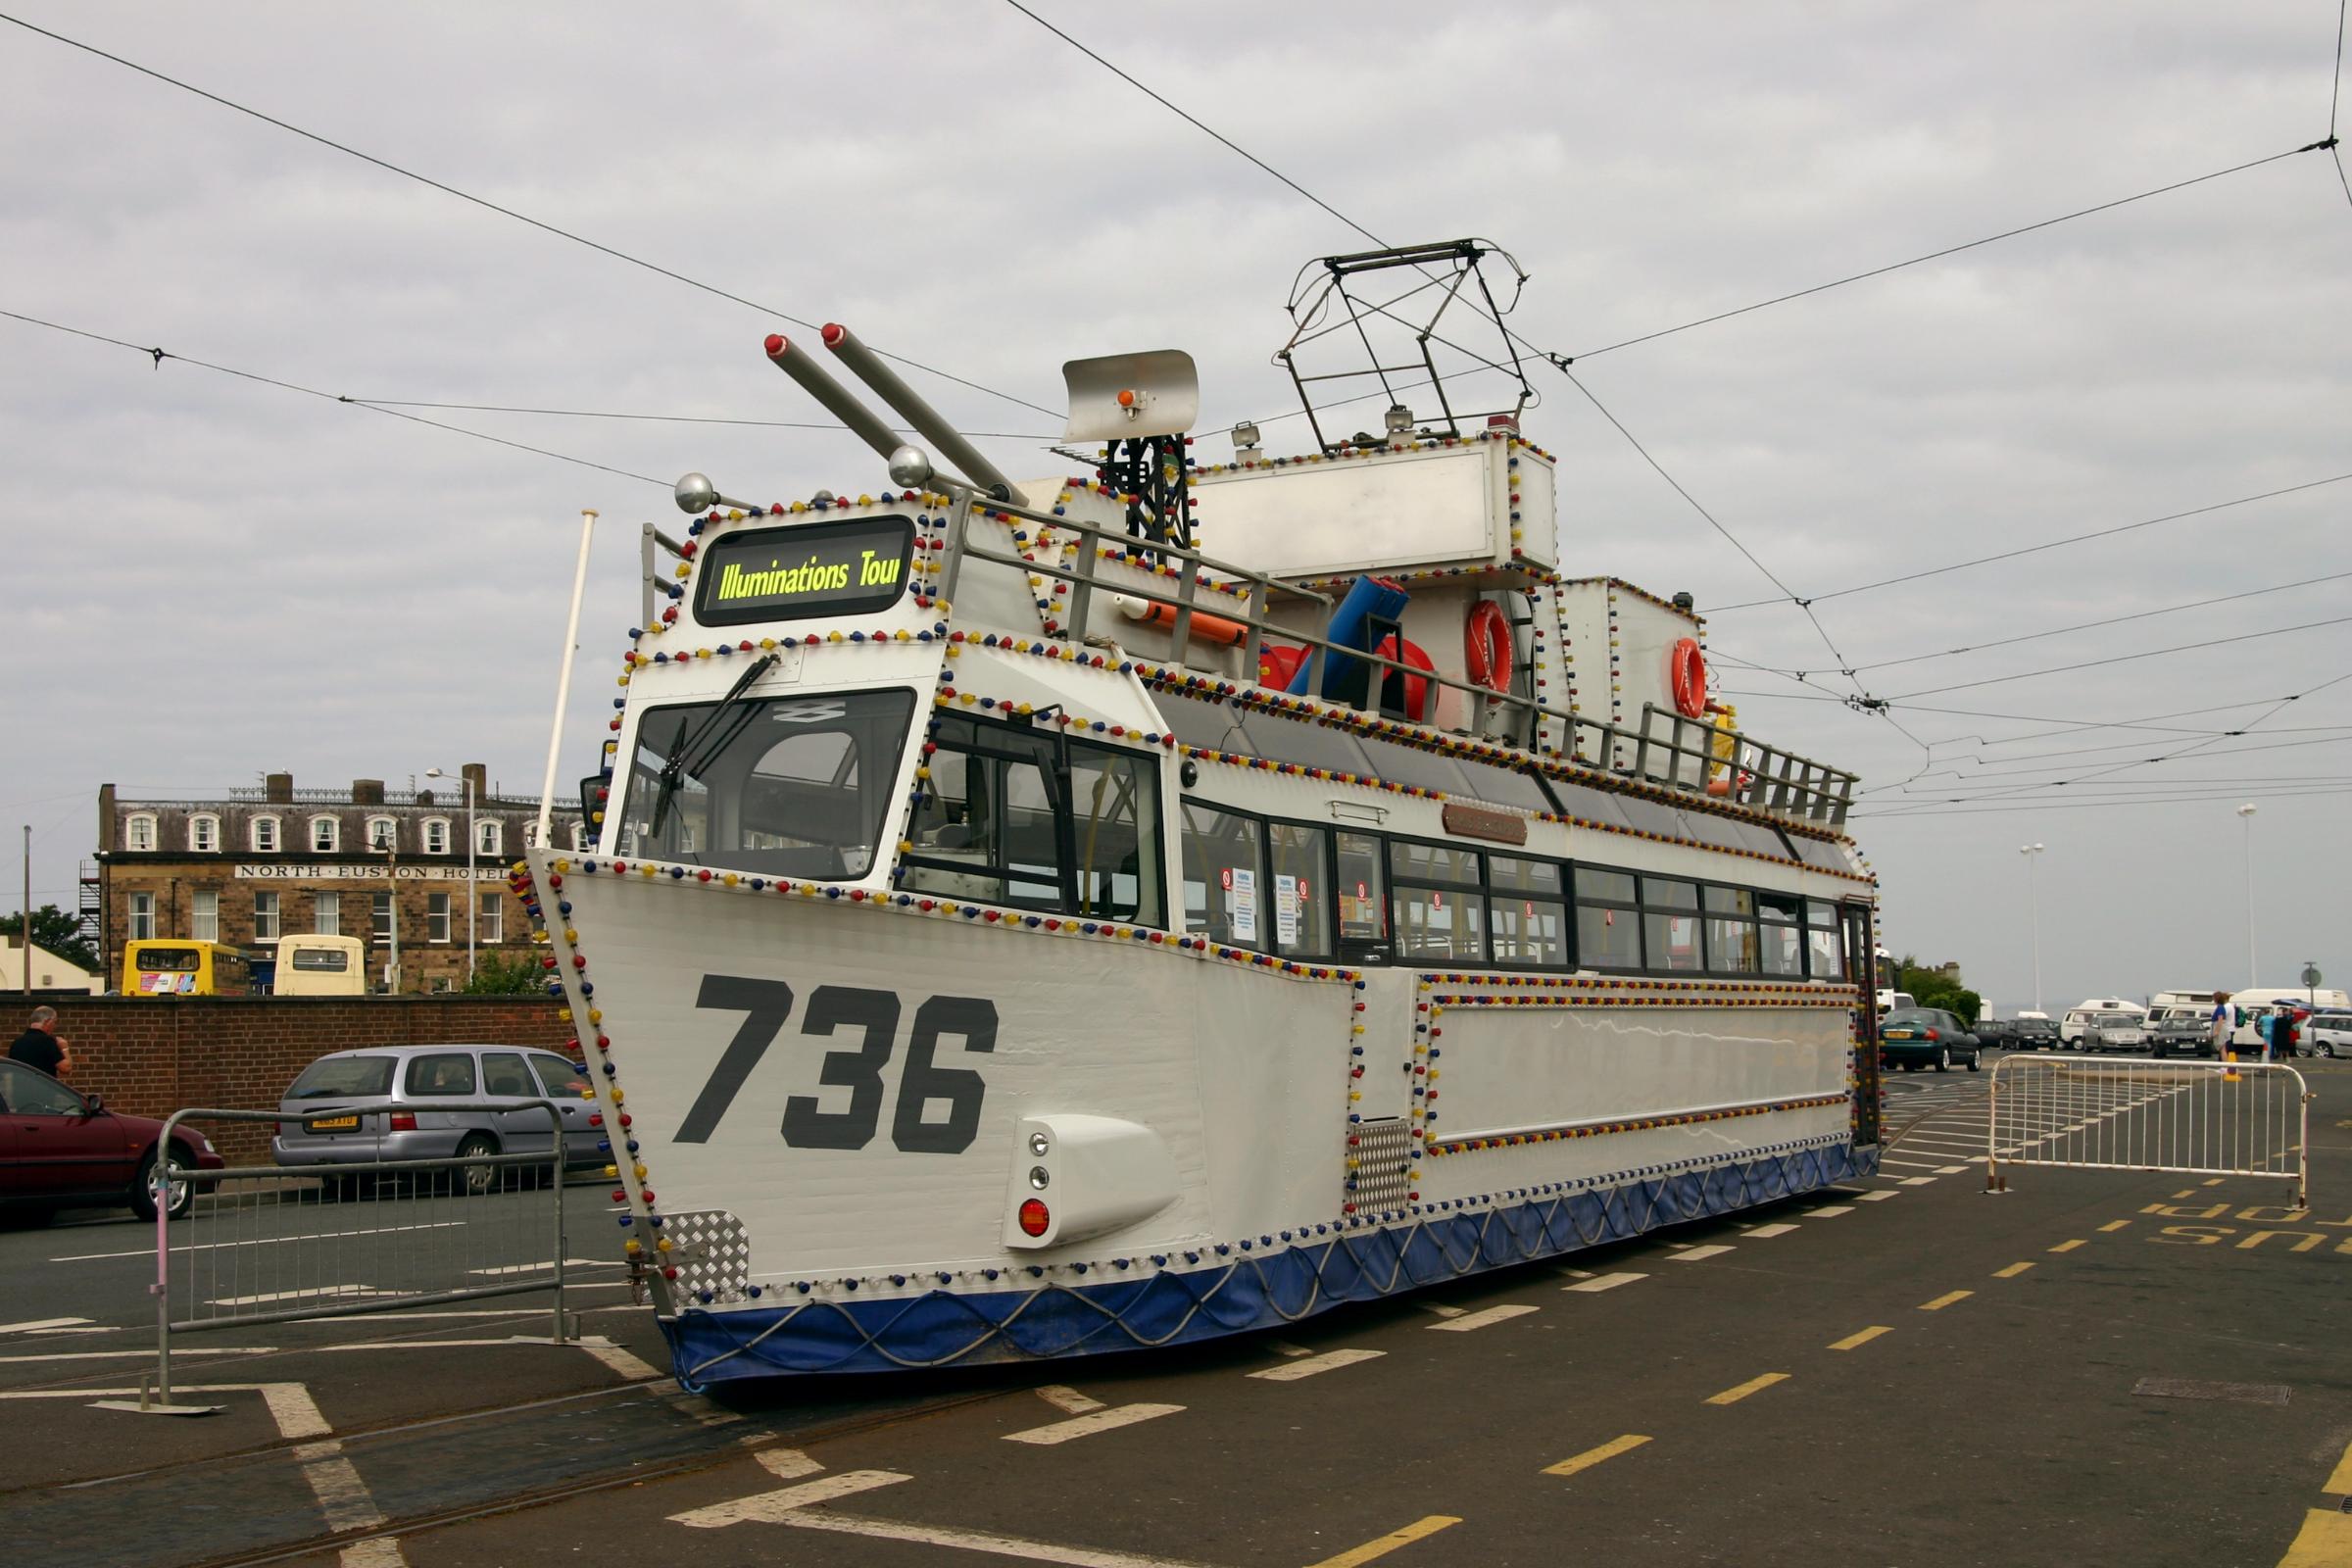 Blackpool Tramway